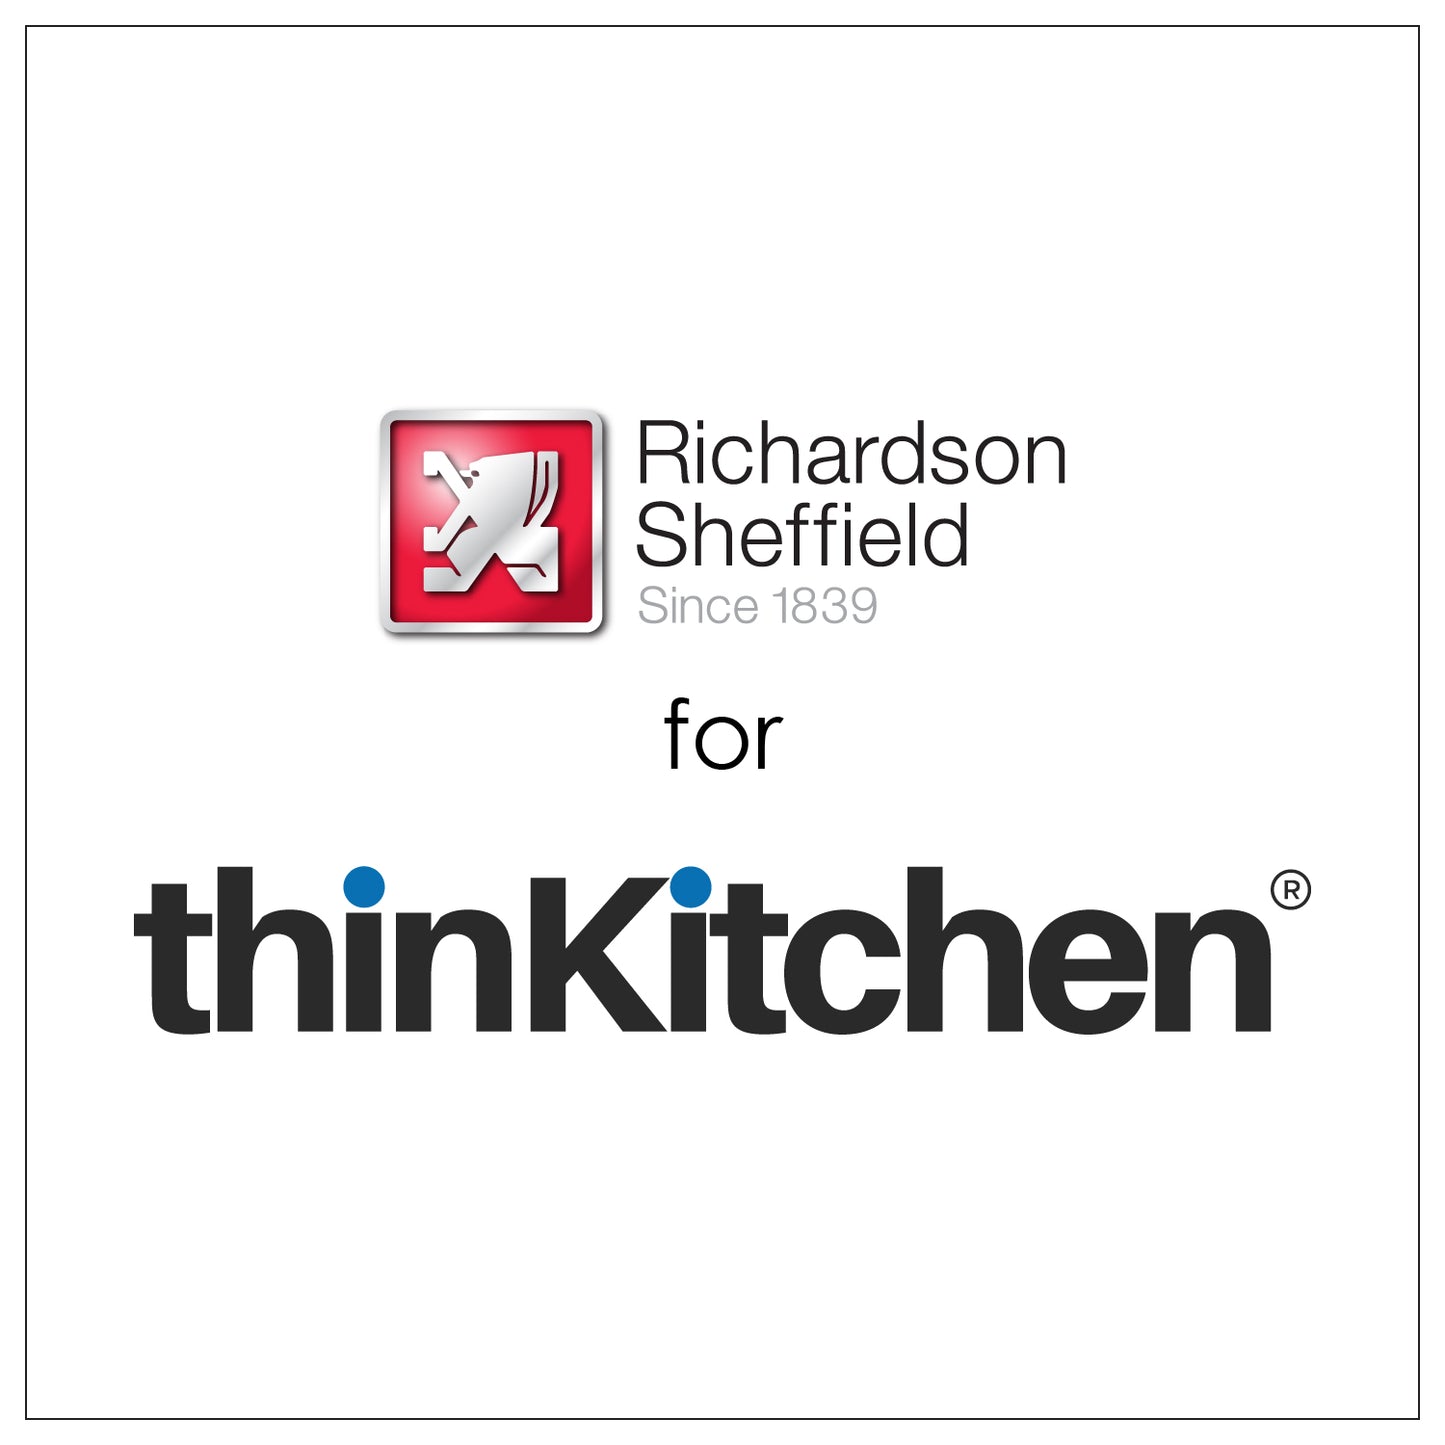 Richardson Sheffield Artisan 15cm Cooks Knife